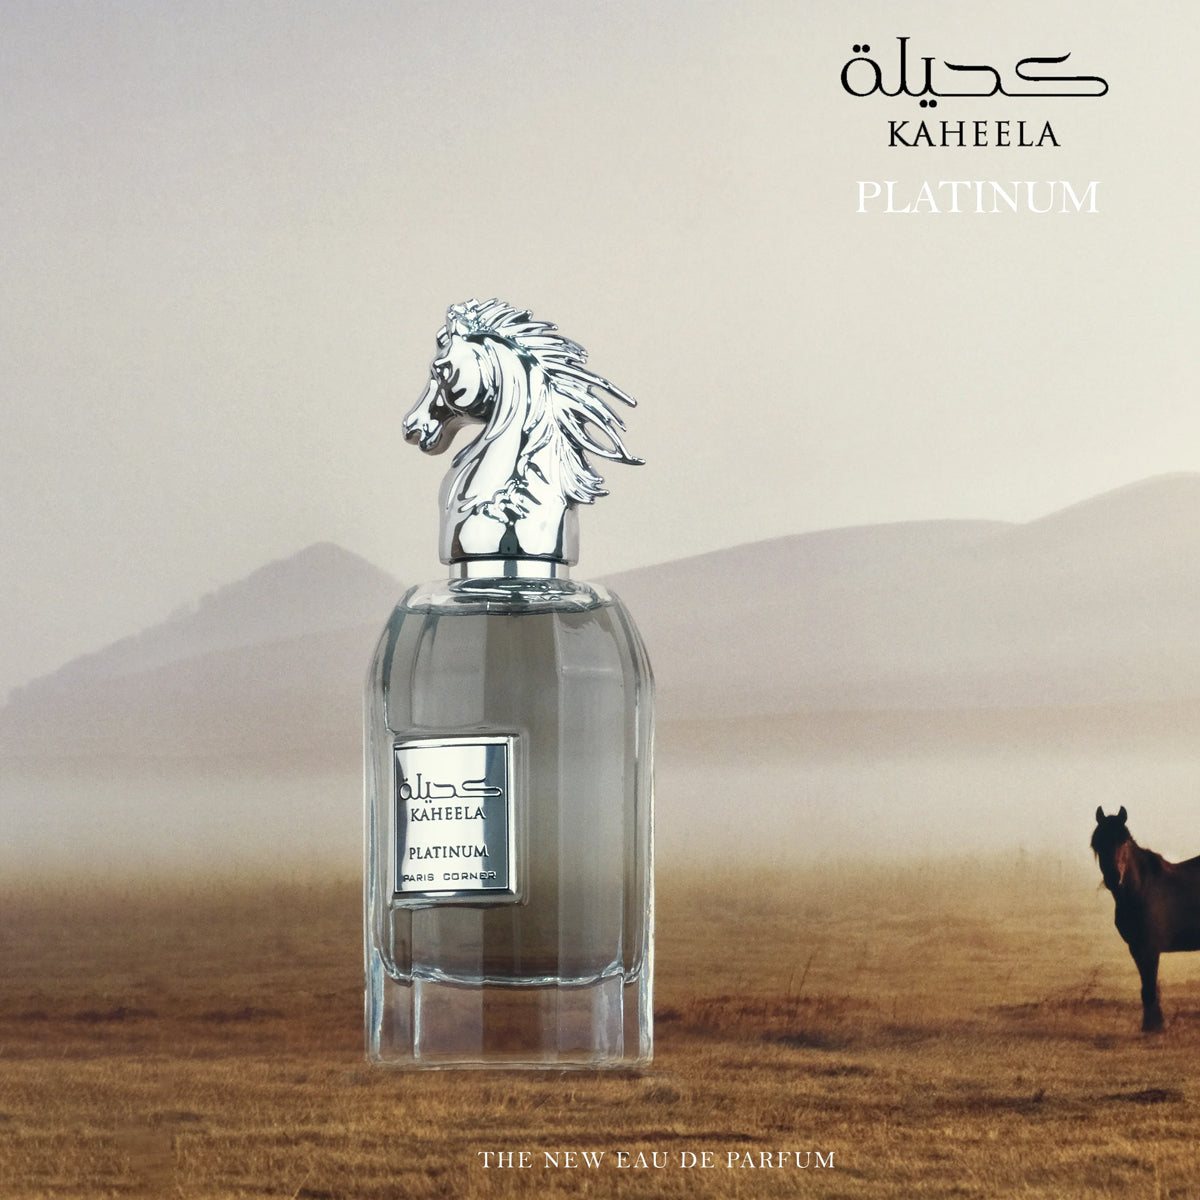  KAHEELA PLATINUM - Best fragrance for any ocassion